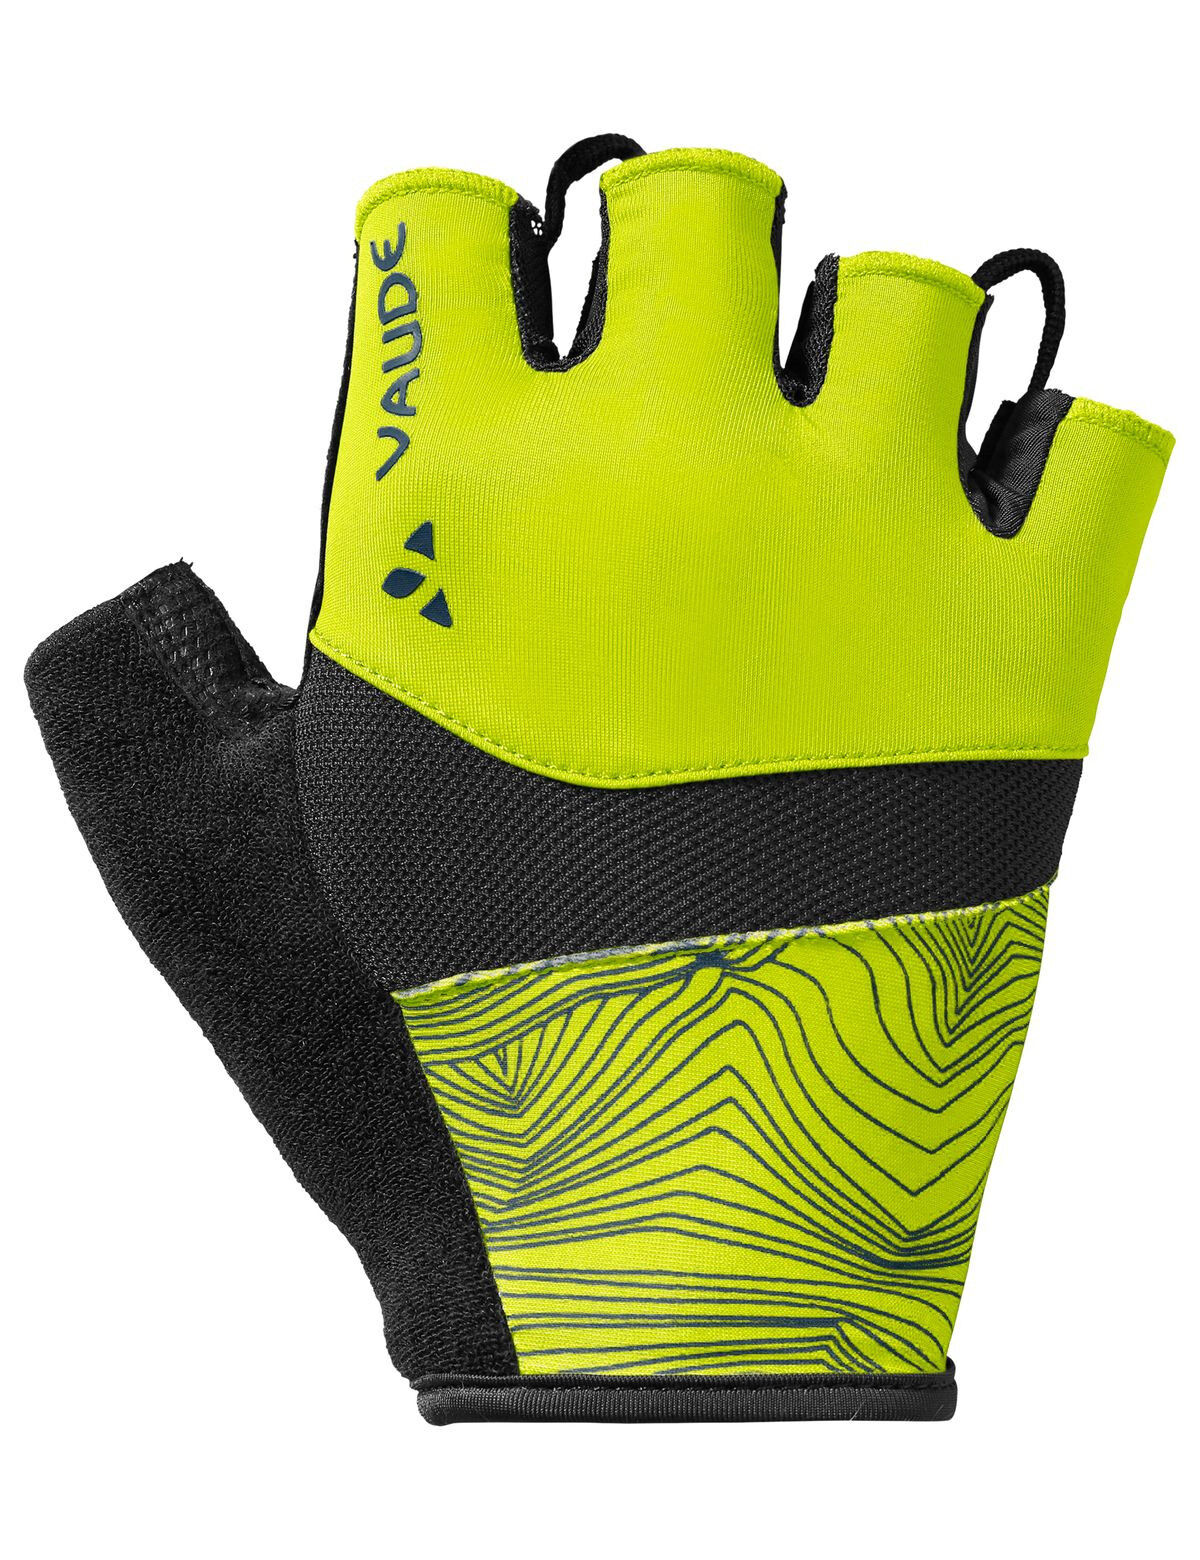 Vaude Advanced Gloves II - Cycling gloves - Men's